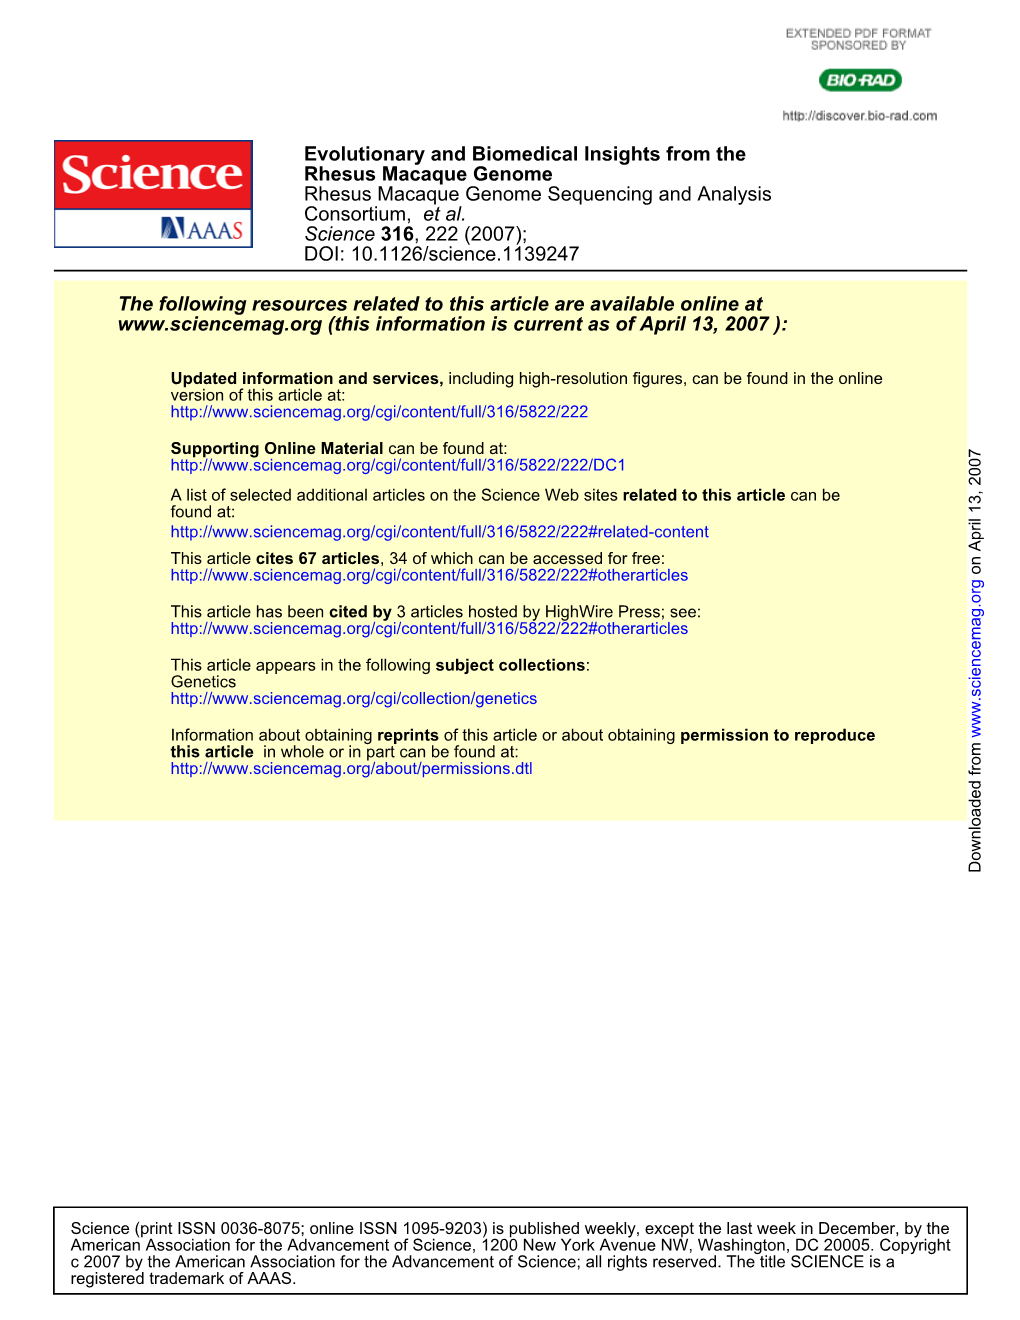 DOI: 10.1126/Science.1139247 , 222 (2007); 316 Science Et Al. Consortium, Rhesus Macaque Genome Sequencing and Analysis Rhesus M